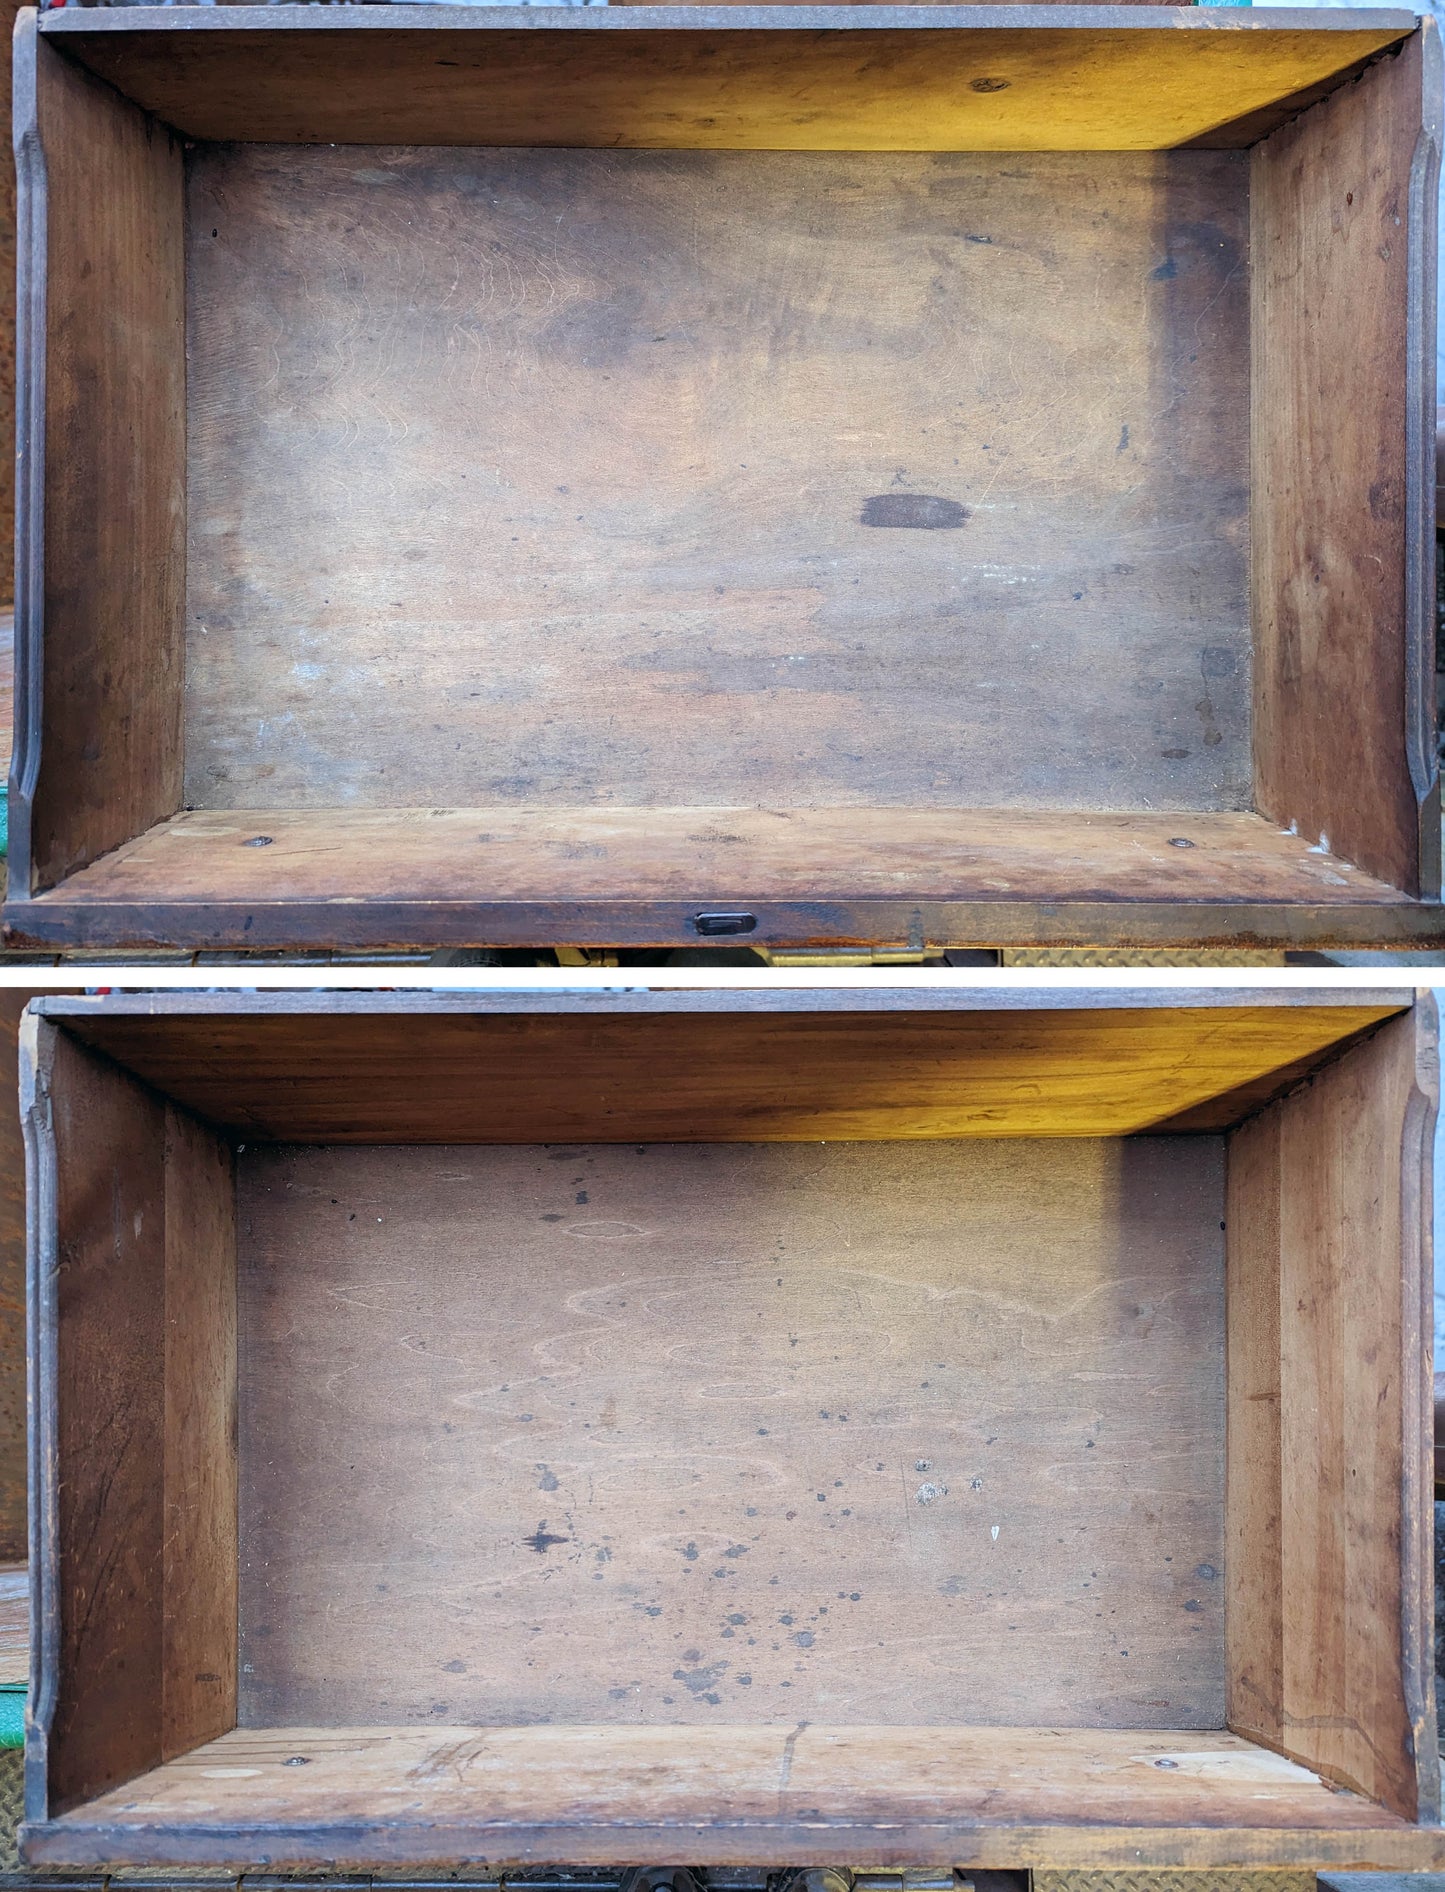 Small Antique Vintage Old Solid Wood Wooden Dresser Highboy High Boy Chest 4 Drawers Quartersawn Oak Faux Grain